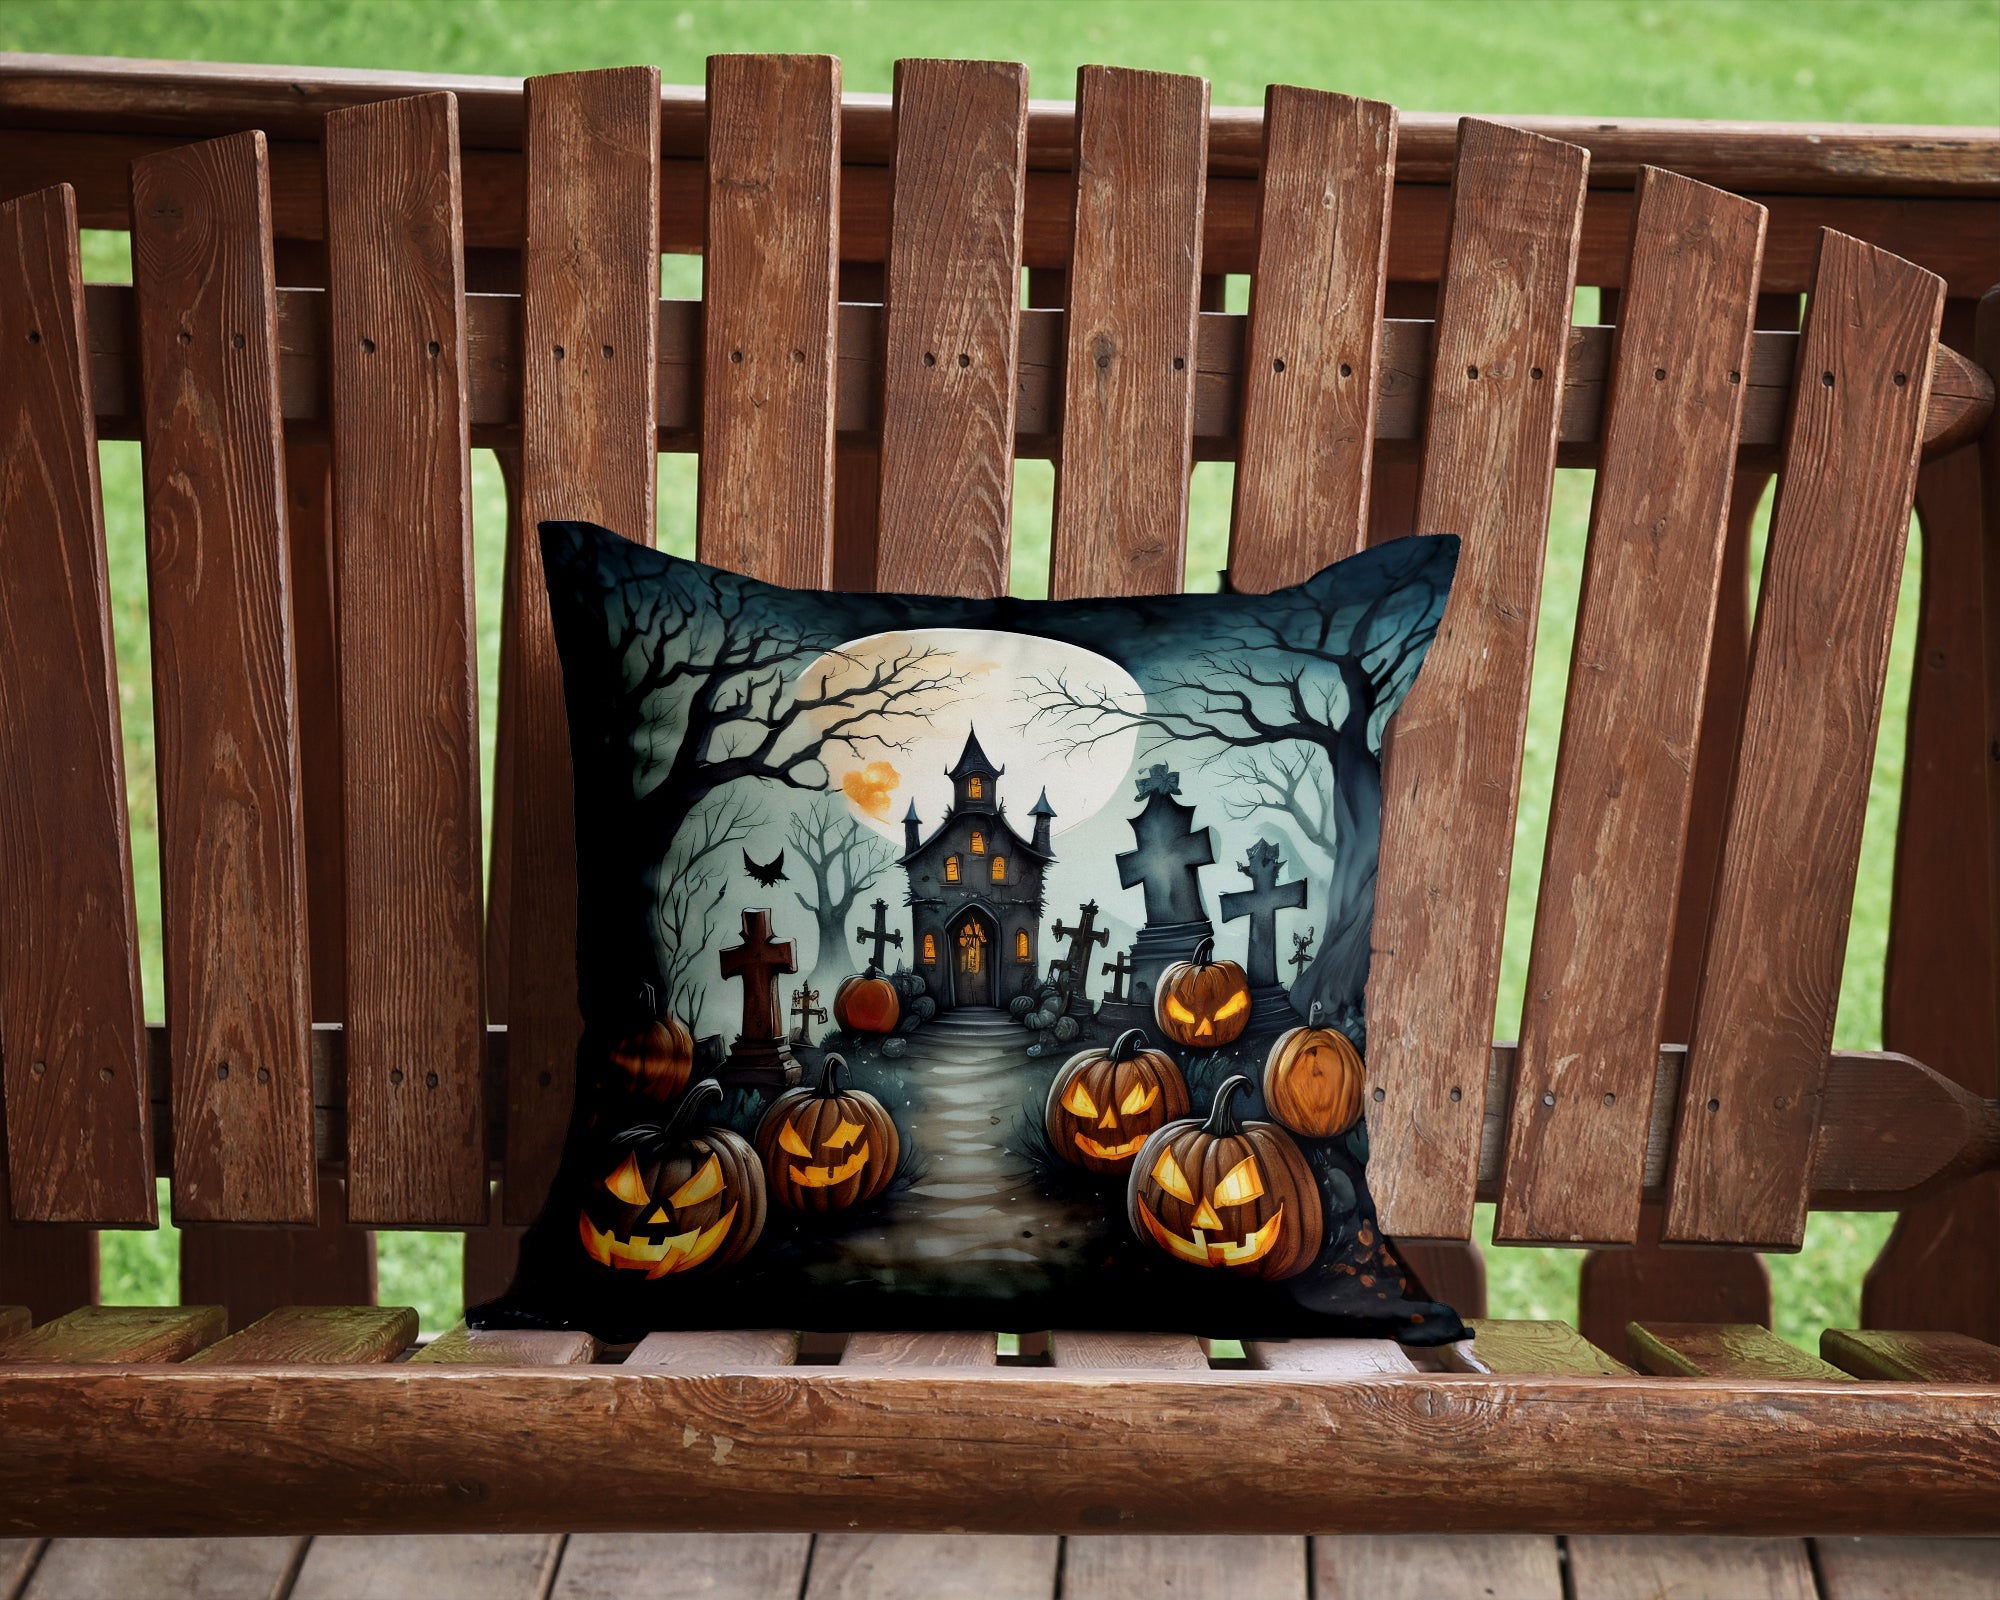 Buy this Graveyard Spooky Halloween Fabric Decorative Pillow